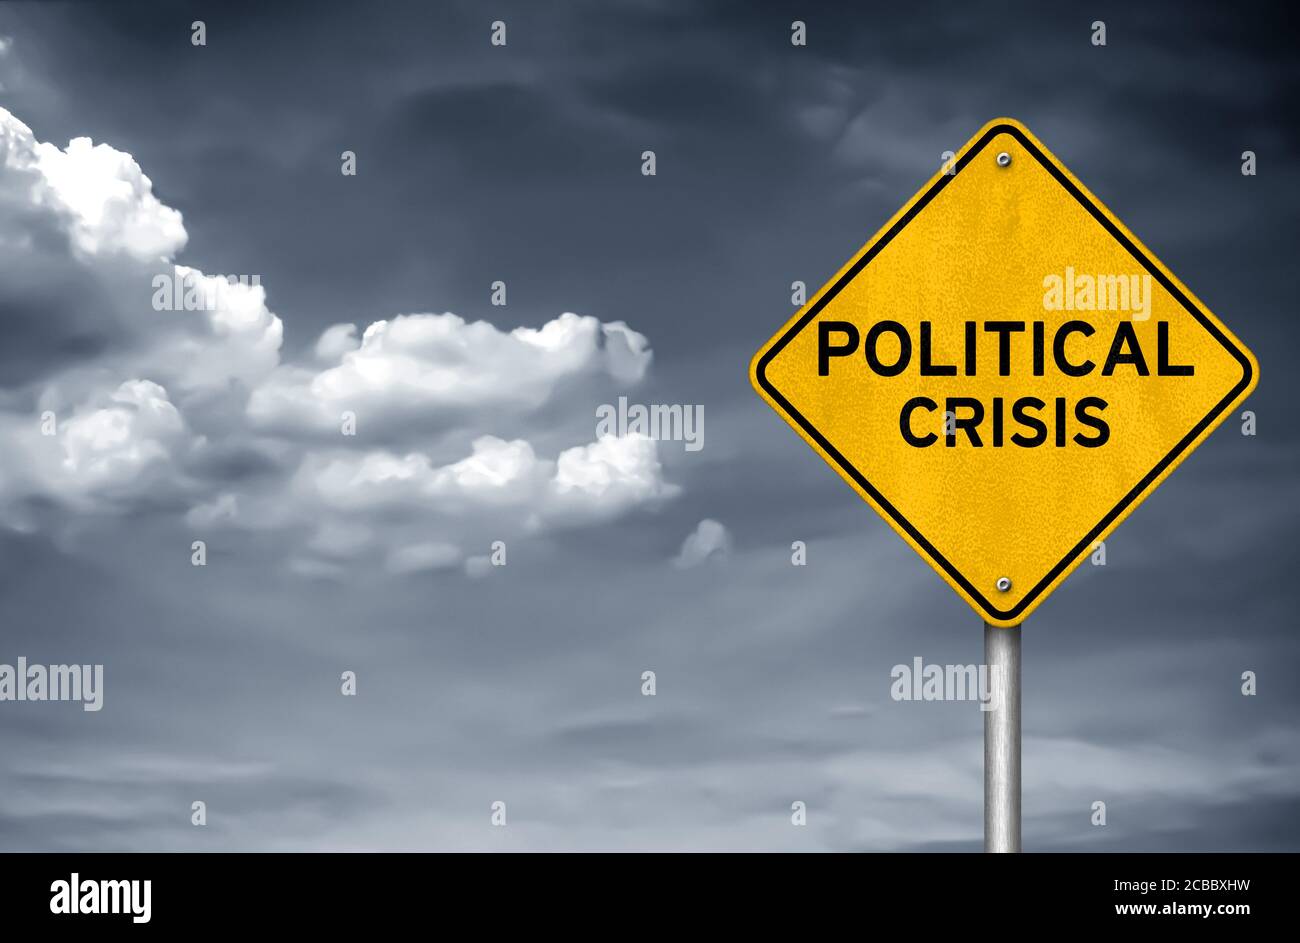 Political crisis road sign Stock Photo